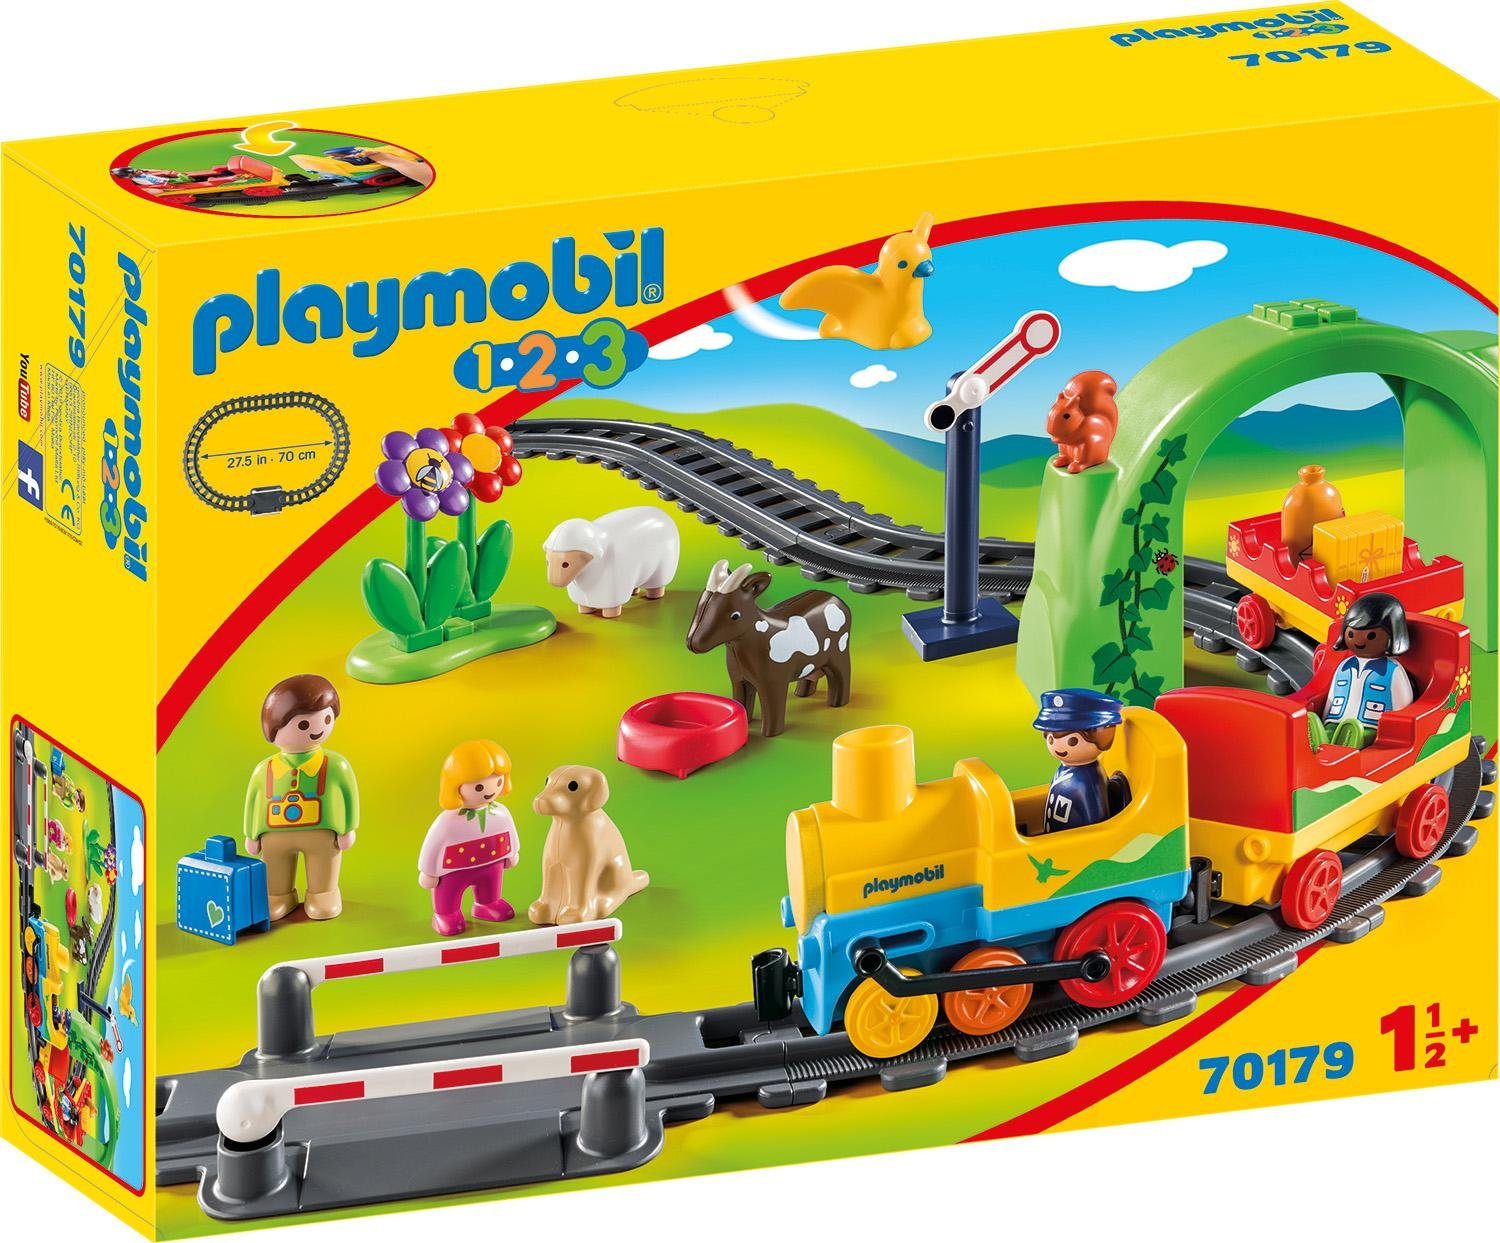 Playmobil Meine 1-2-3, Europe erste (70179), Made in Eisenbahn Playmobil® Konstruktions-Spielset